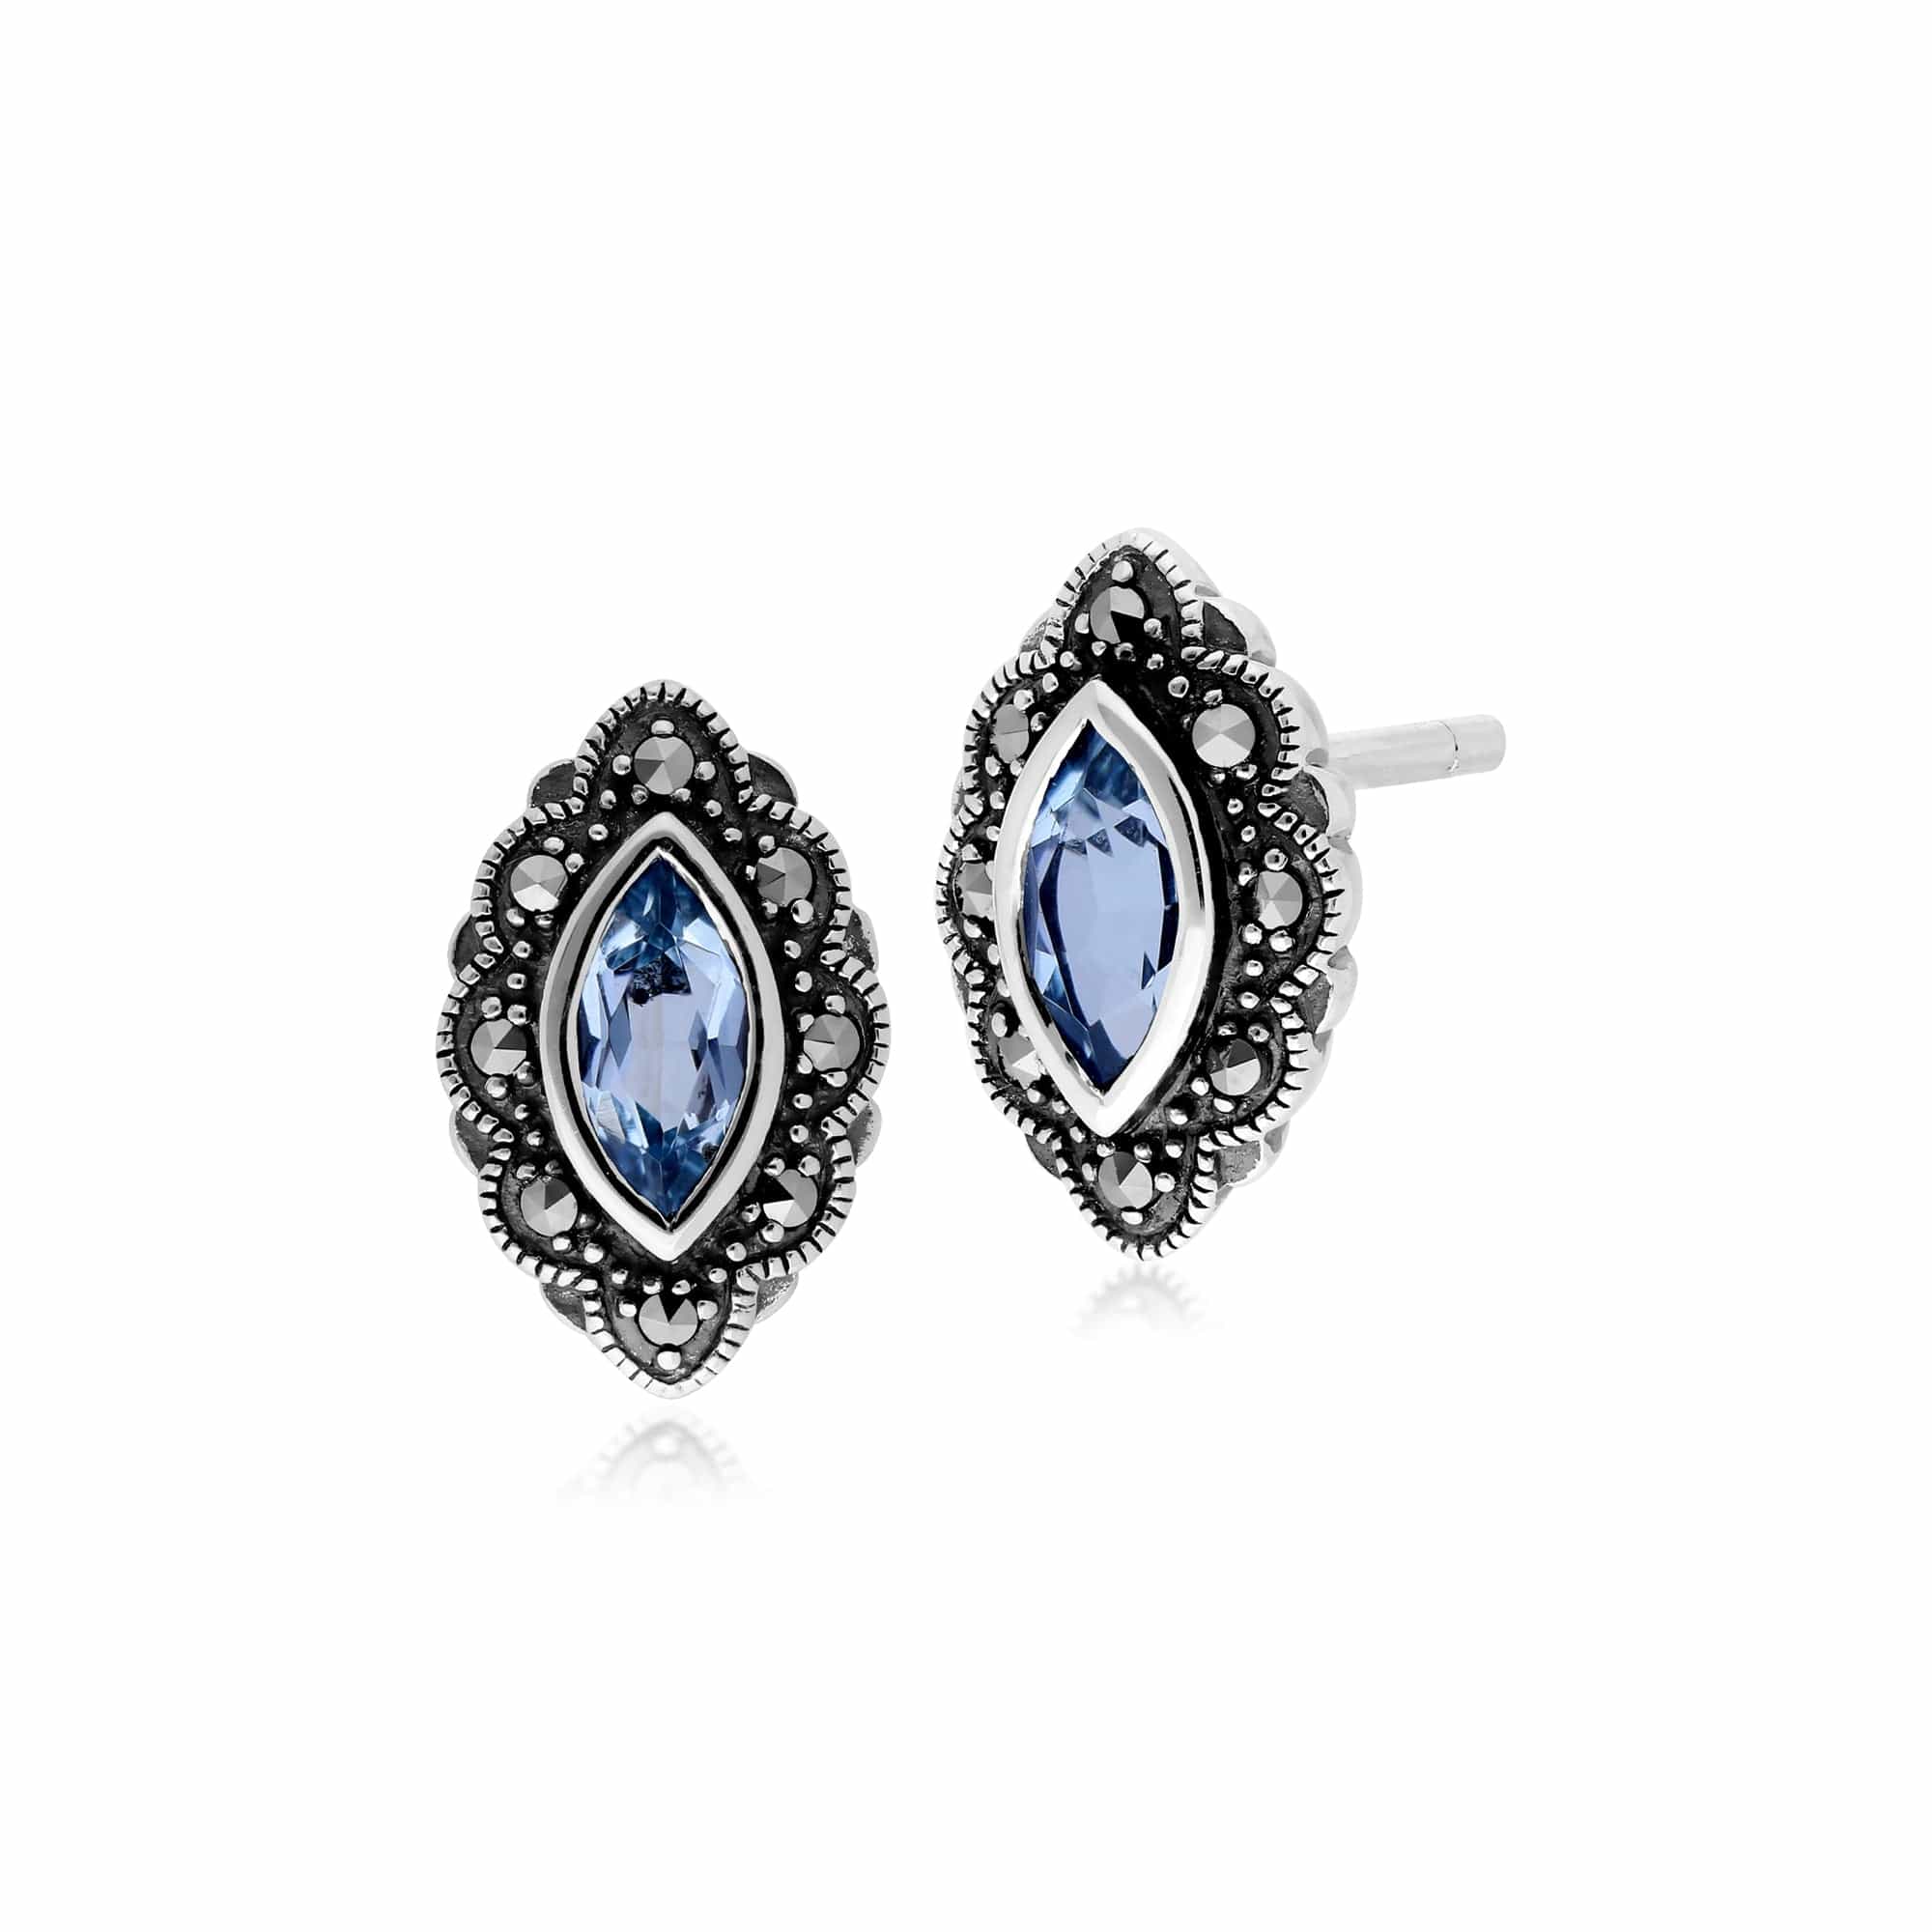 214E852502925 Art Nouveau Marquise Blue Topaz & Marcasite Stud Earrings in 925 Sterling Silver 1